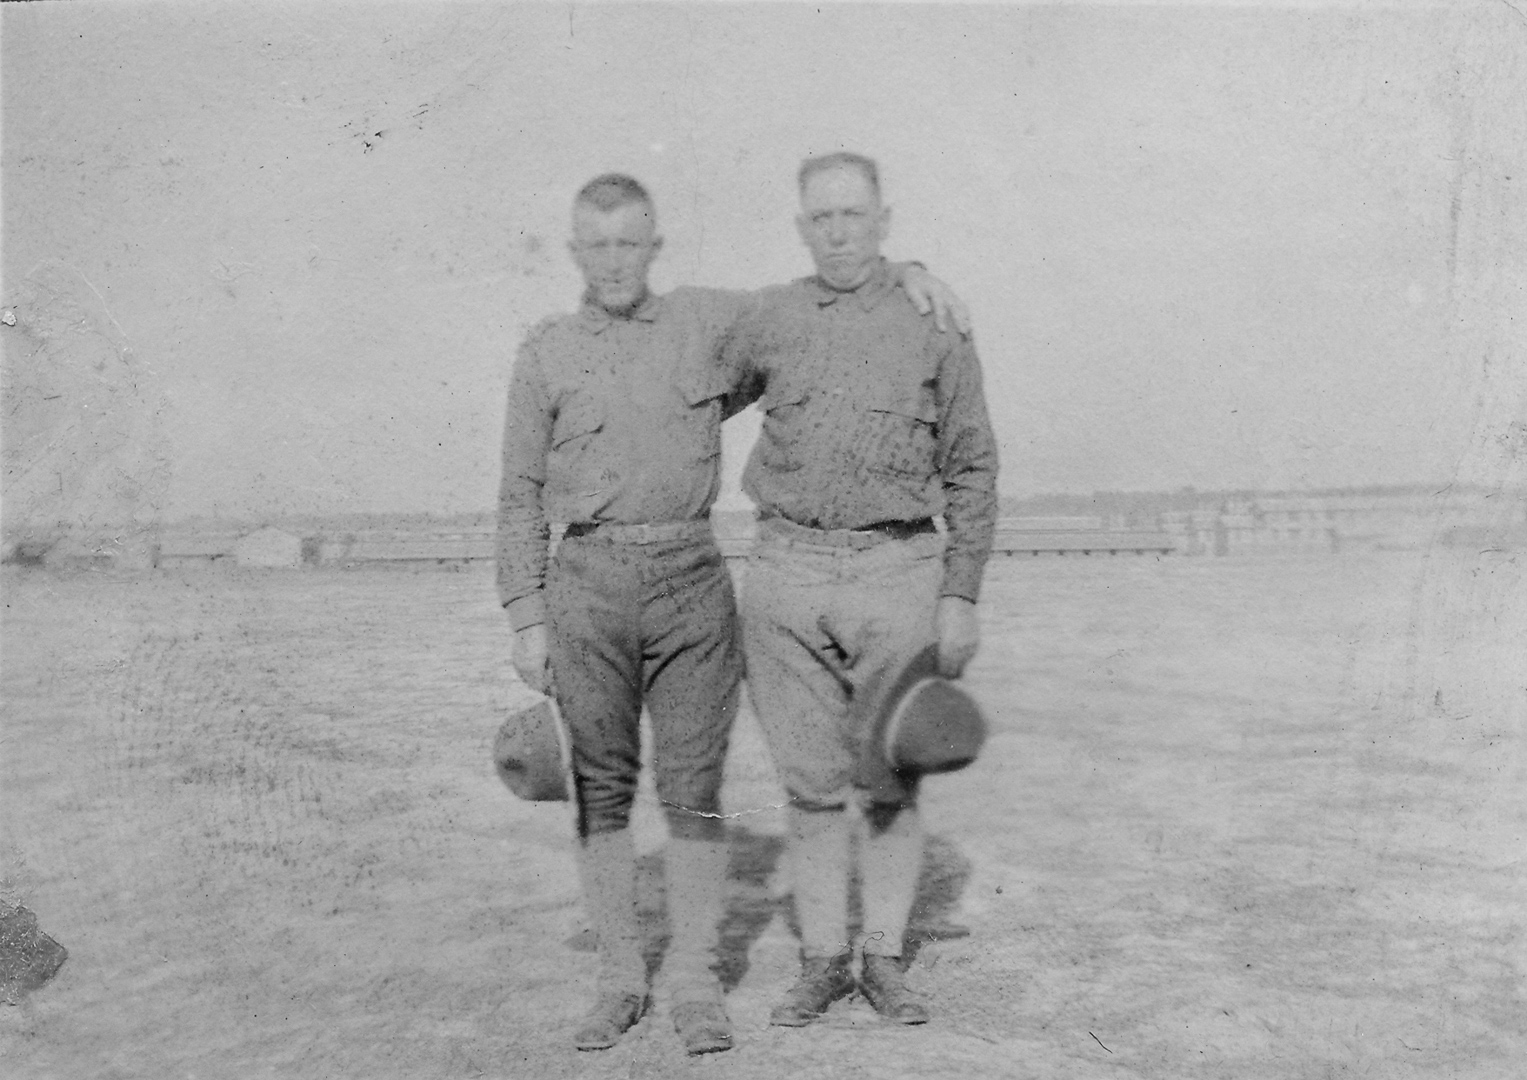 Camp Lee, Nov 10 1917